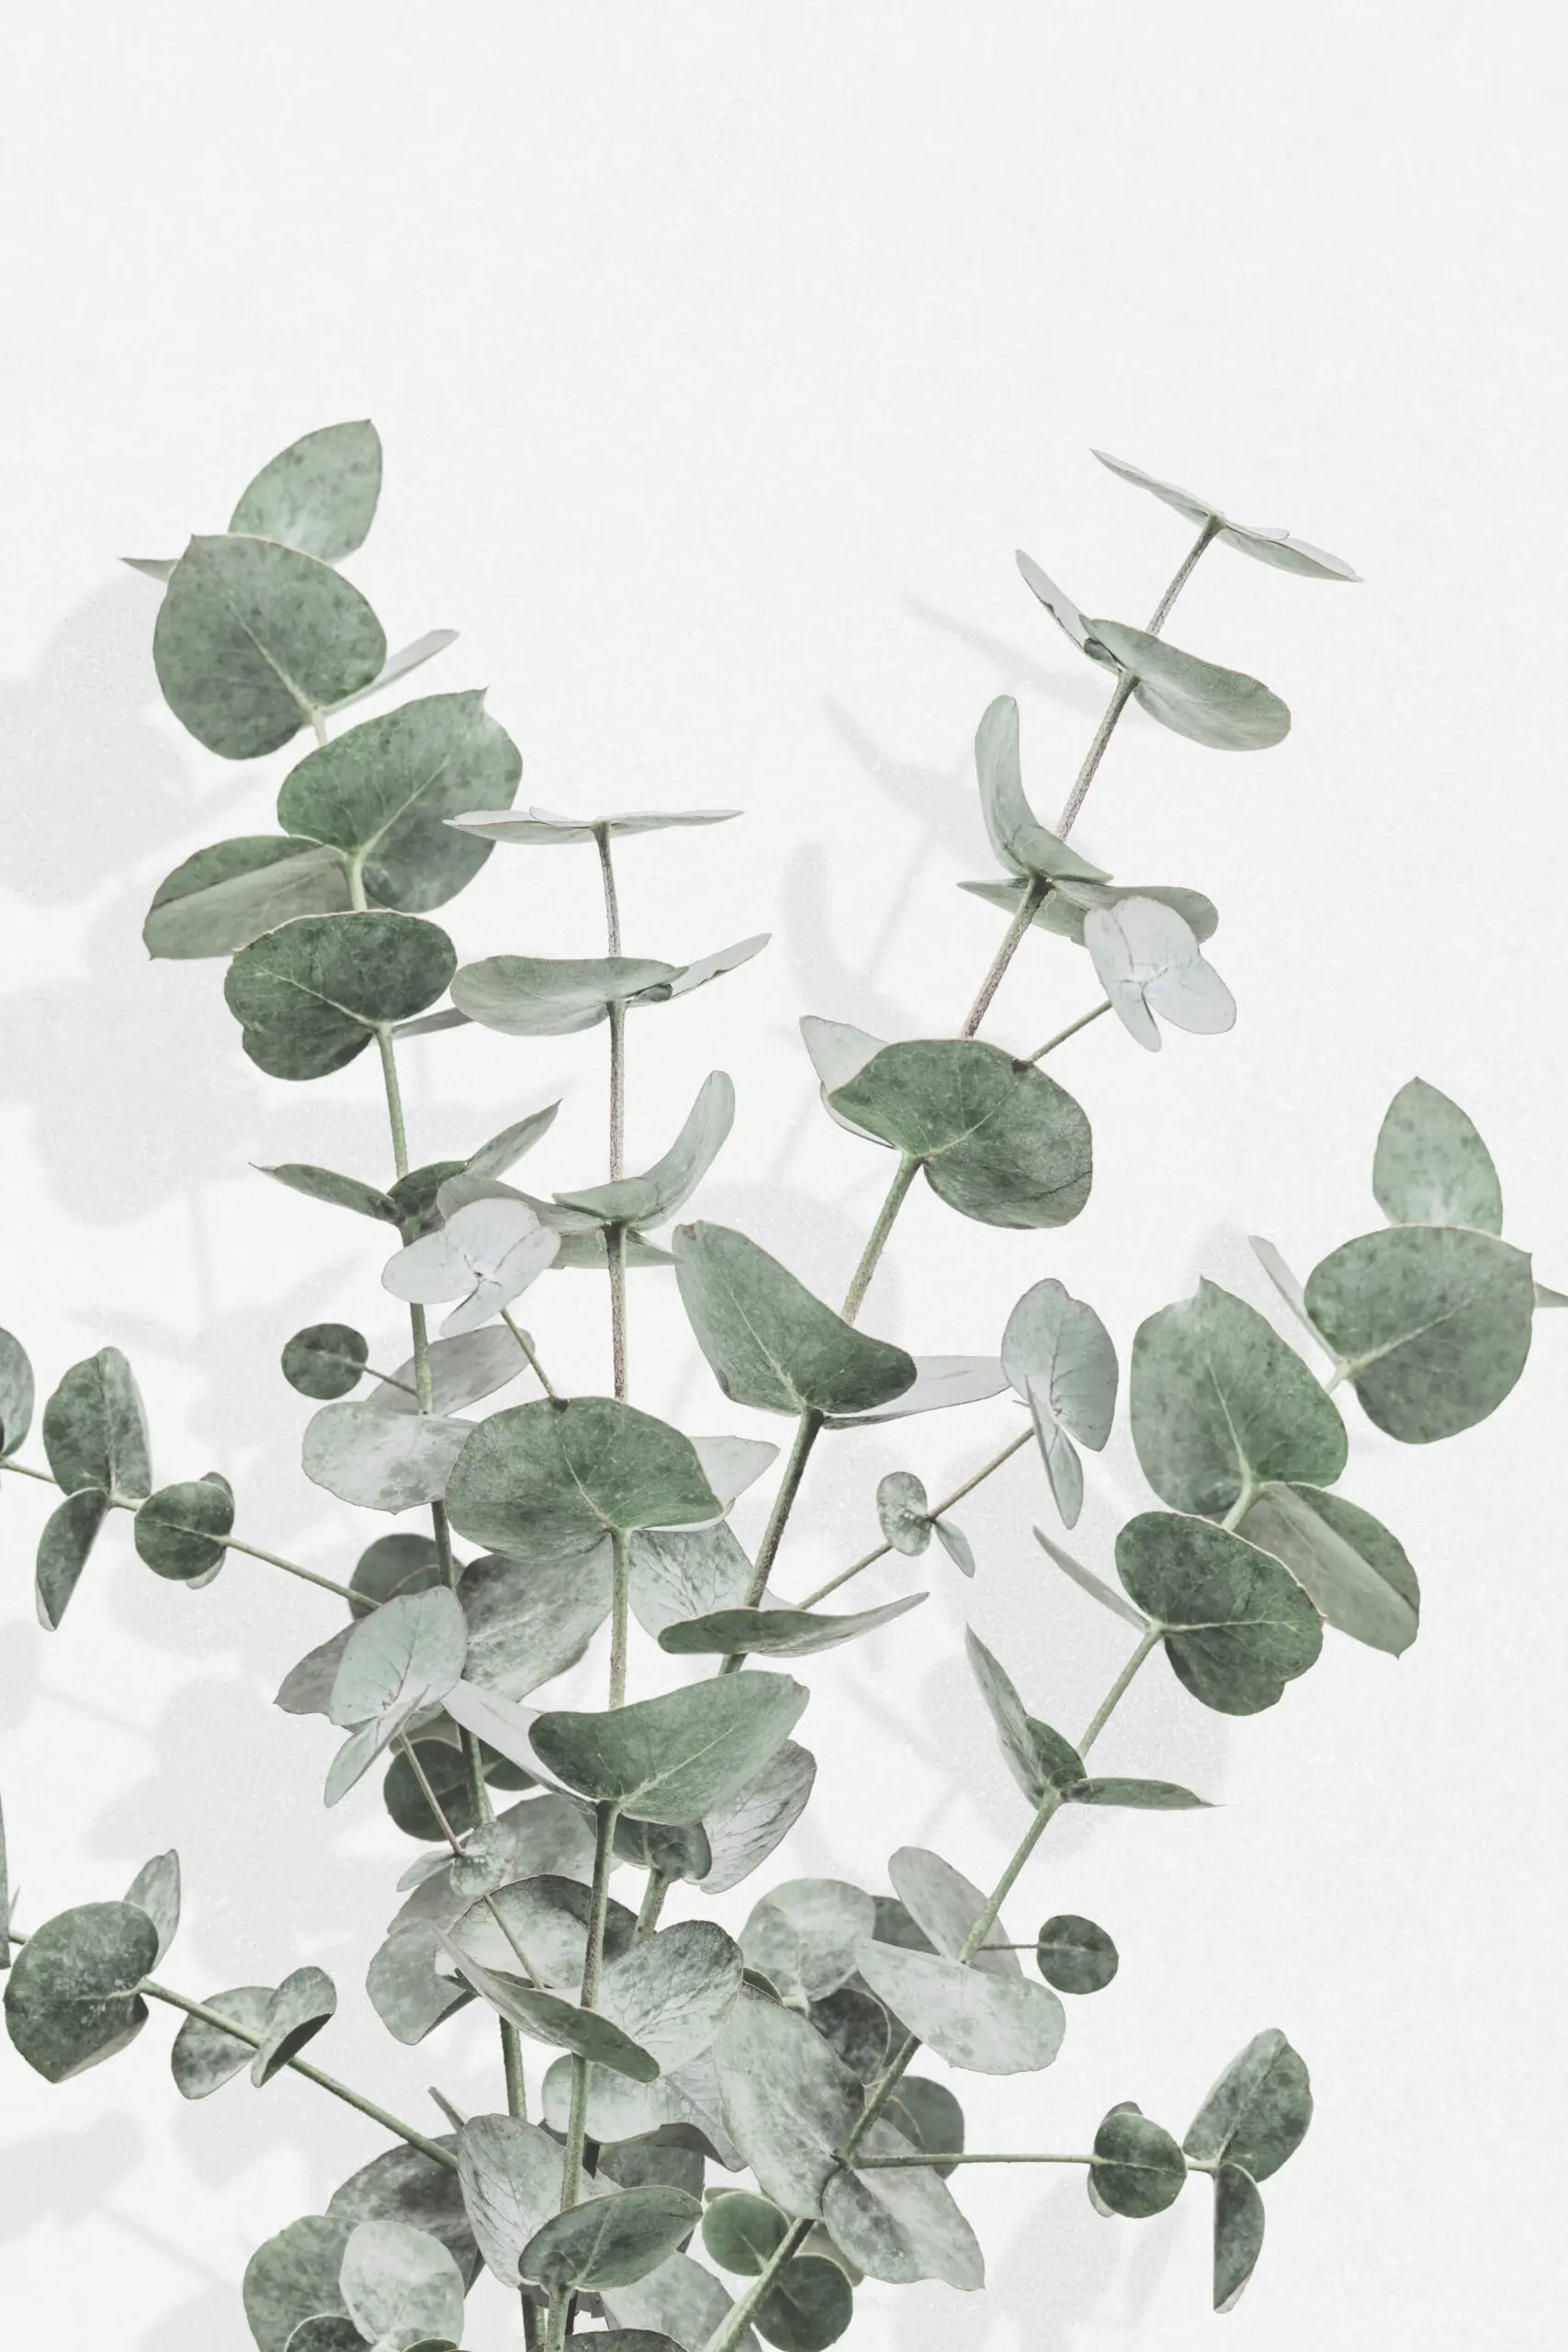 Wandbild (6097) Eucalyptus Creative 16 by 1x.com studio präsentiert: Stillleben,Details und Strukturen,Natur,Blätter,Gräser,Floral